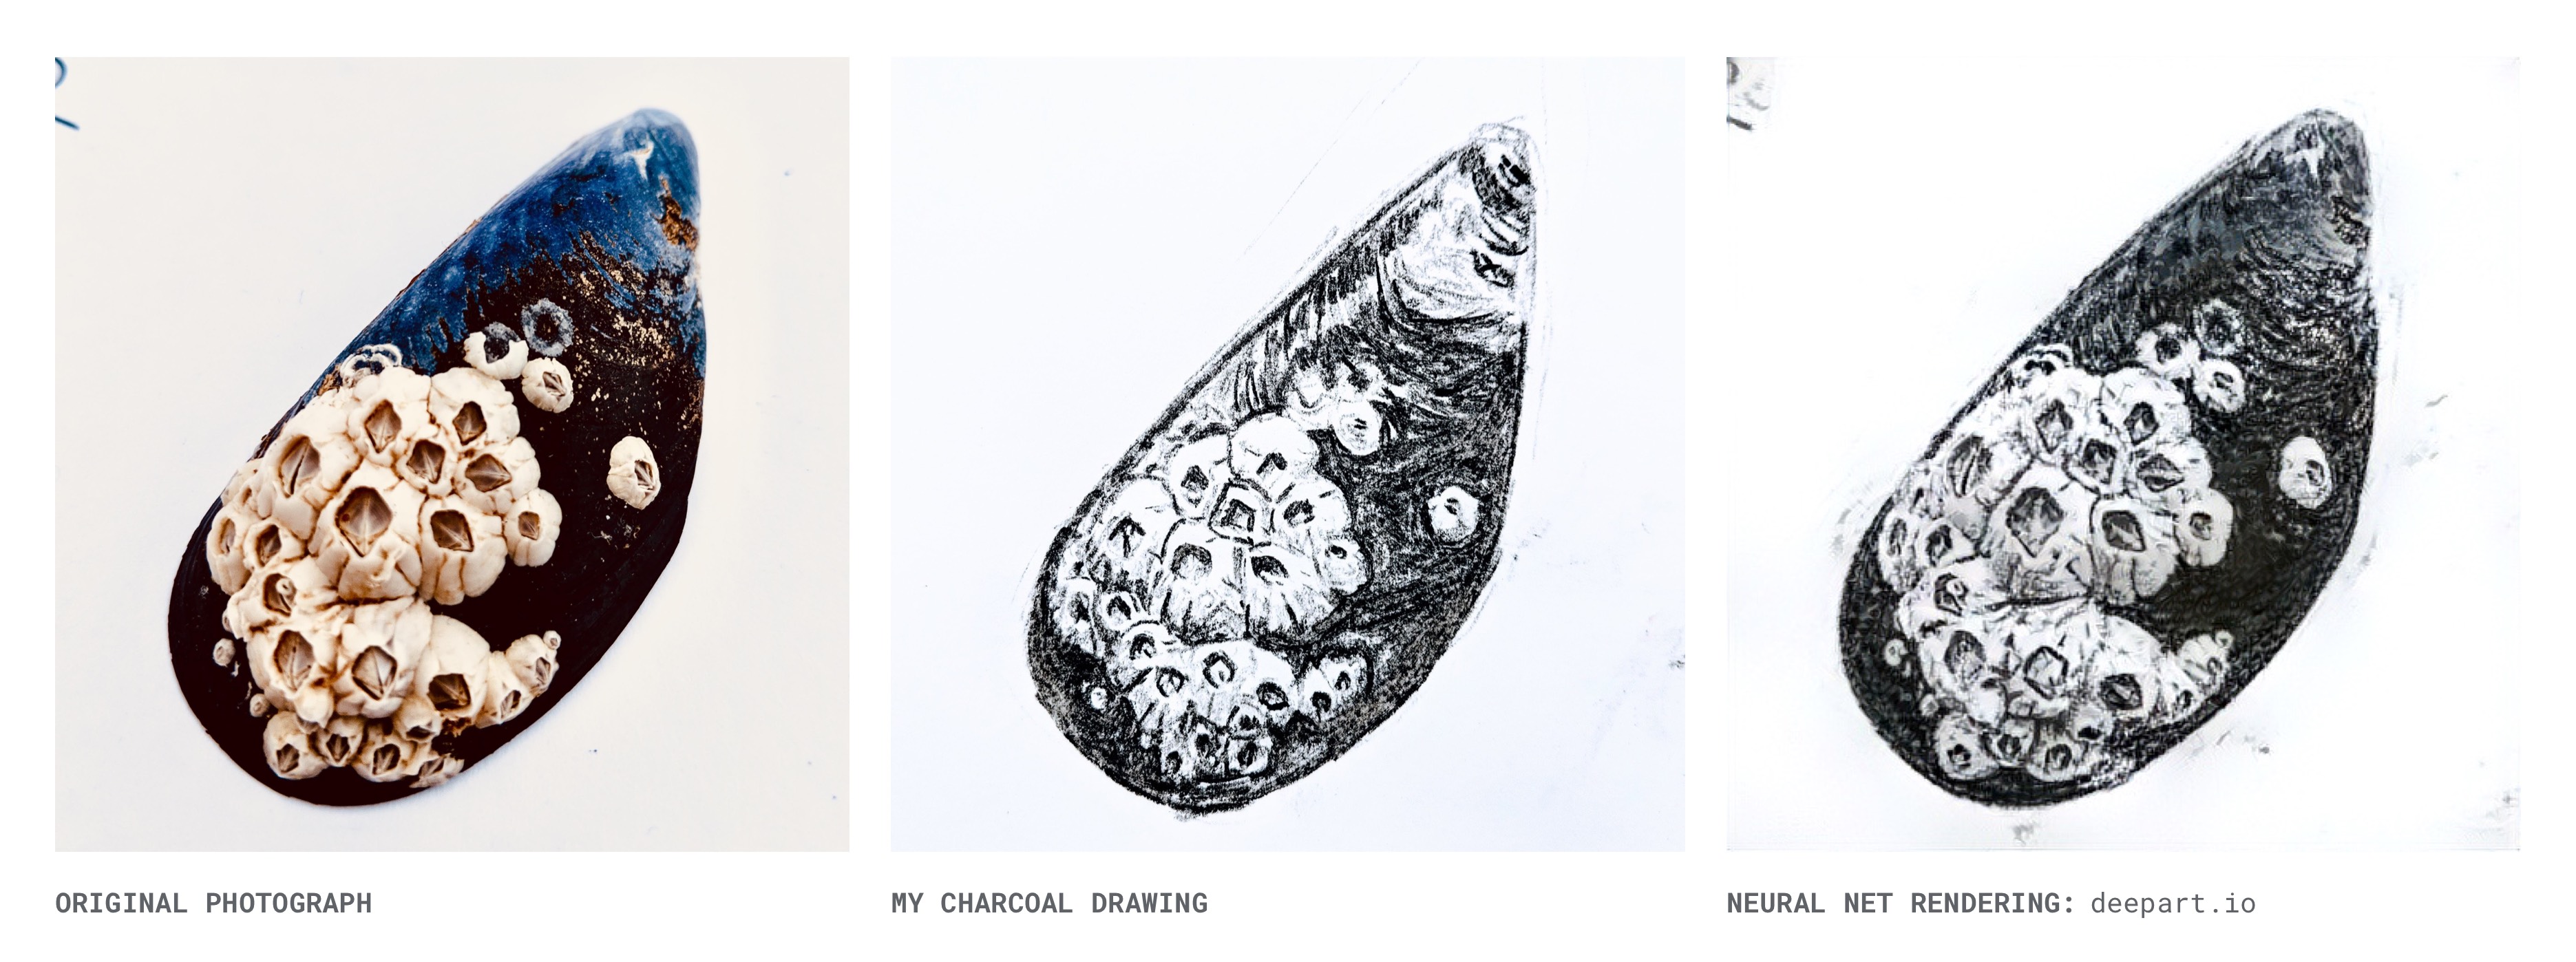 Seashell: Original Photo, My Charcoal Drawing & Deepart Rendering